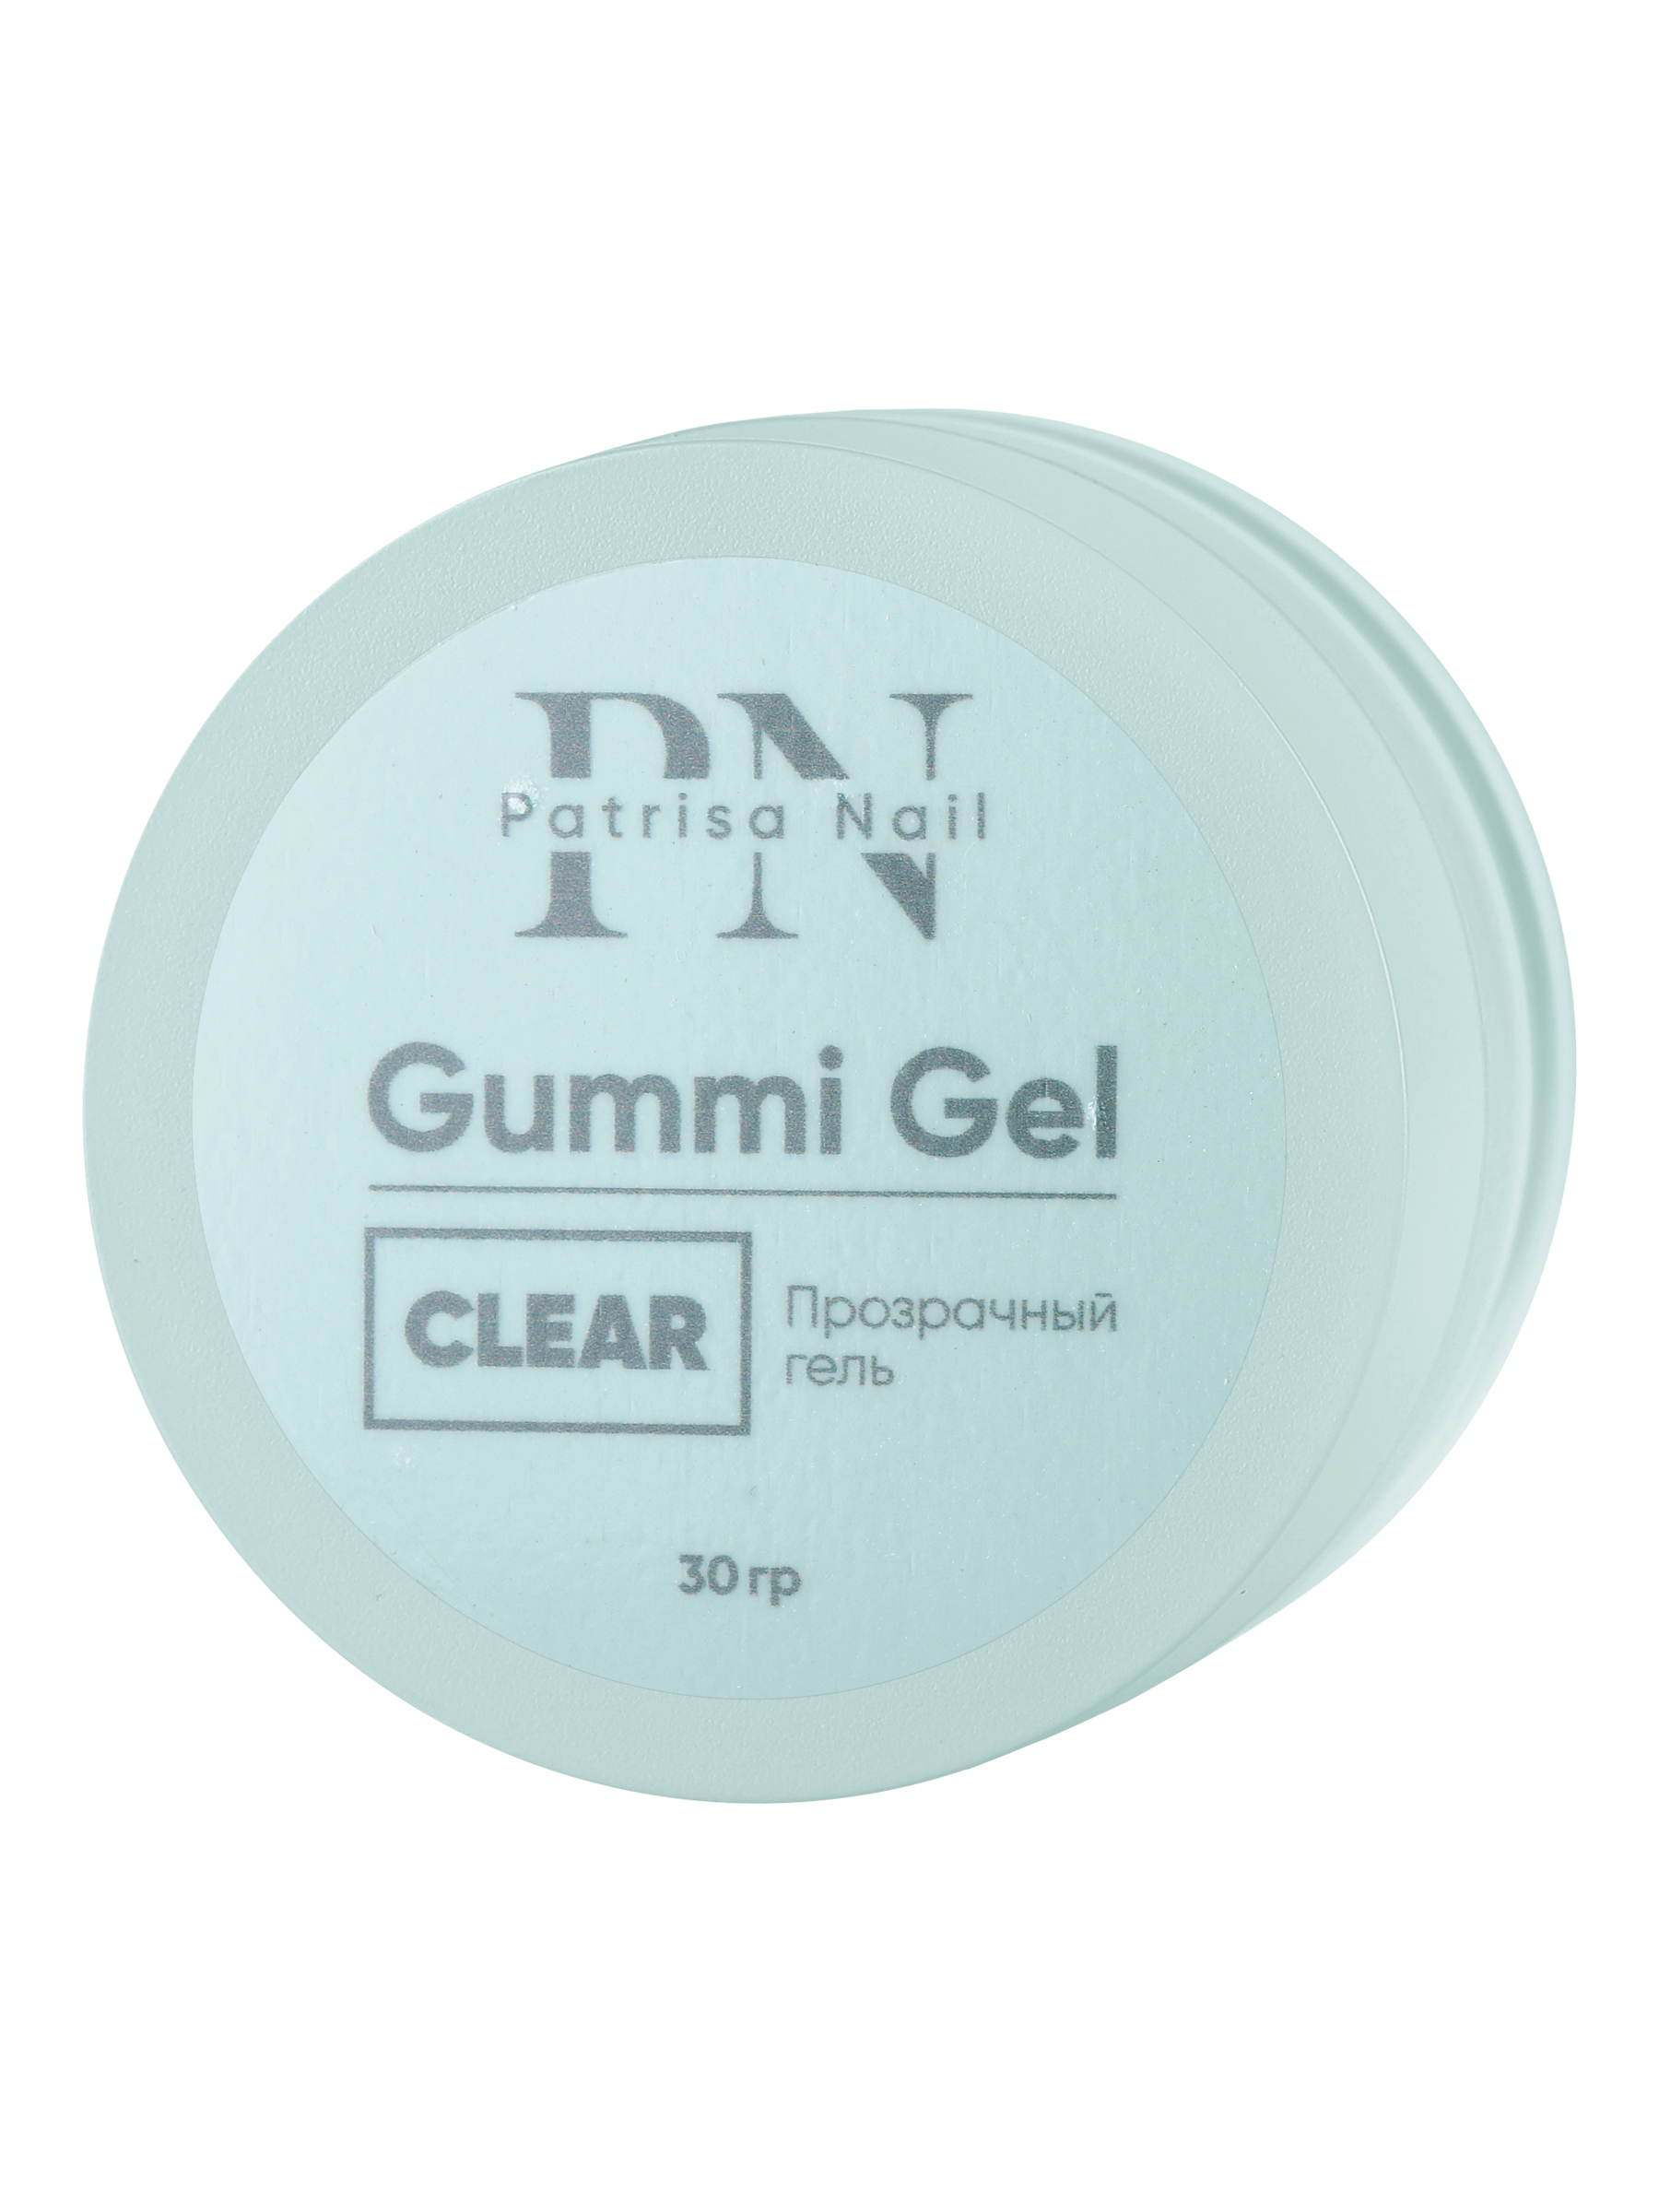 Прозрачный гель Patrisa nail Gummi Gel Clear высокой вязкости 30 г гель abc irisk clear plus 50мл